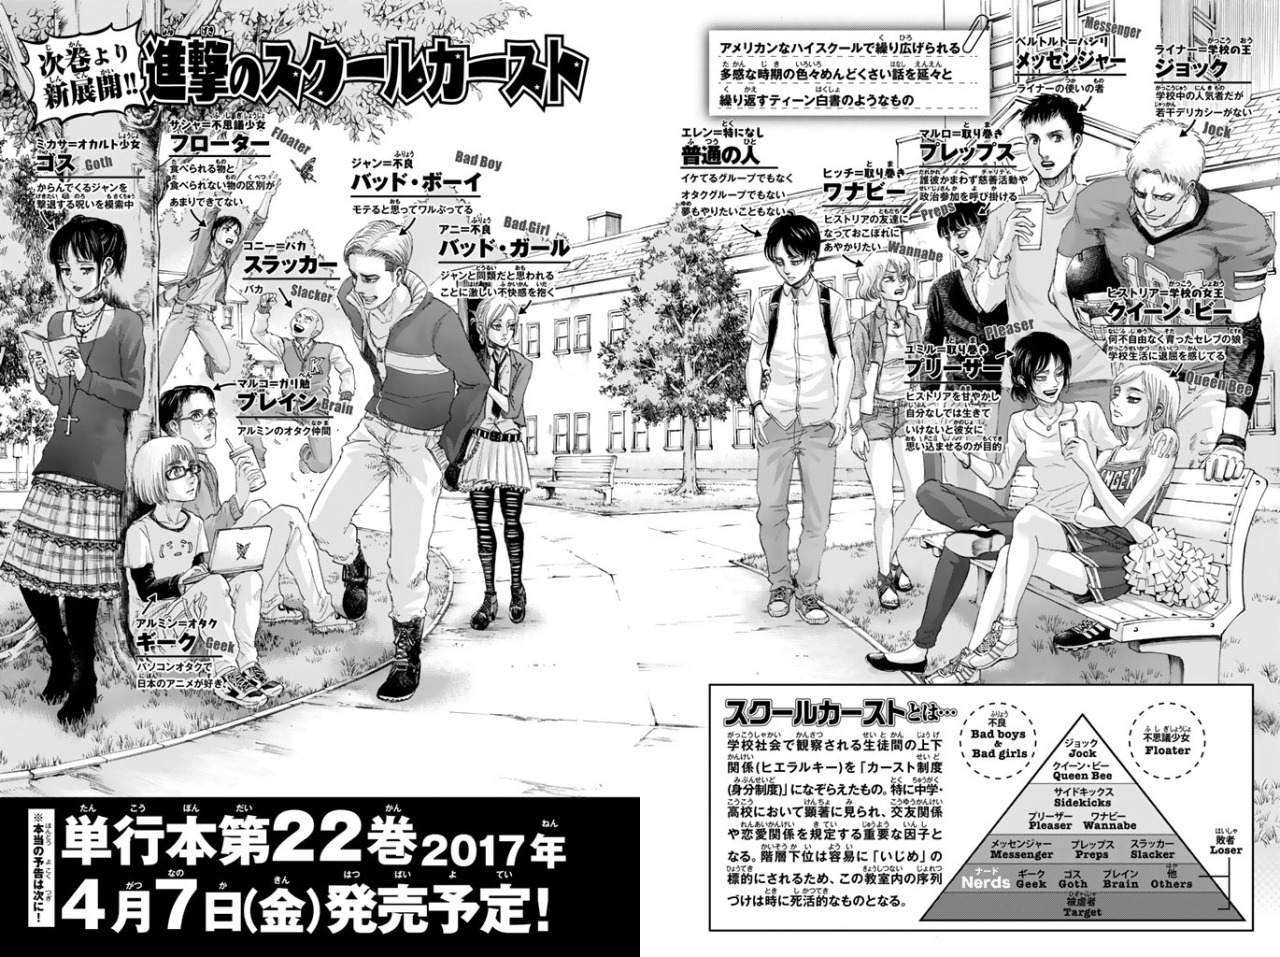 fuku-shuu: Isayama Hajime drew yet another high school AU of the Shingeki no Kyojin